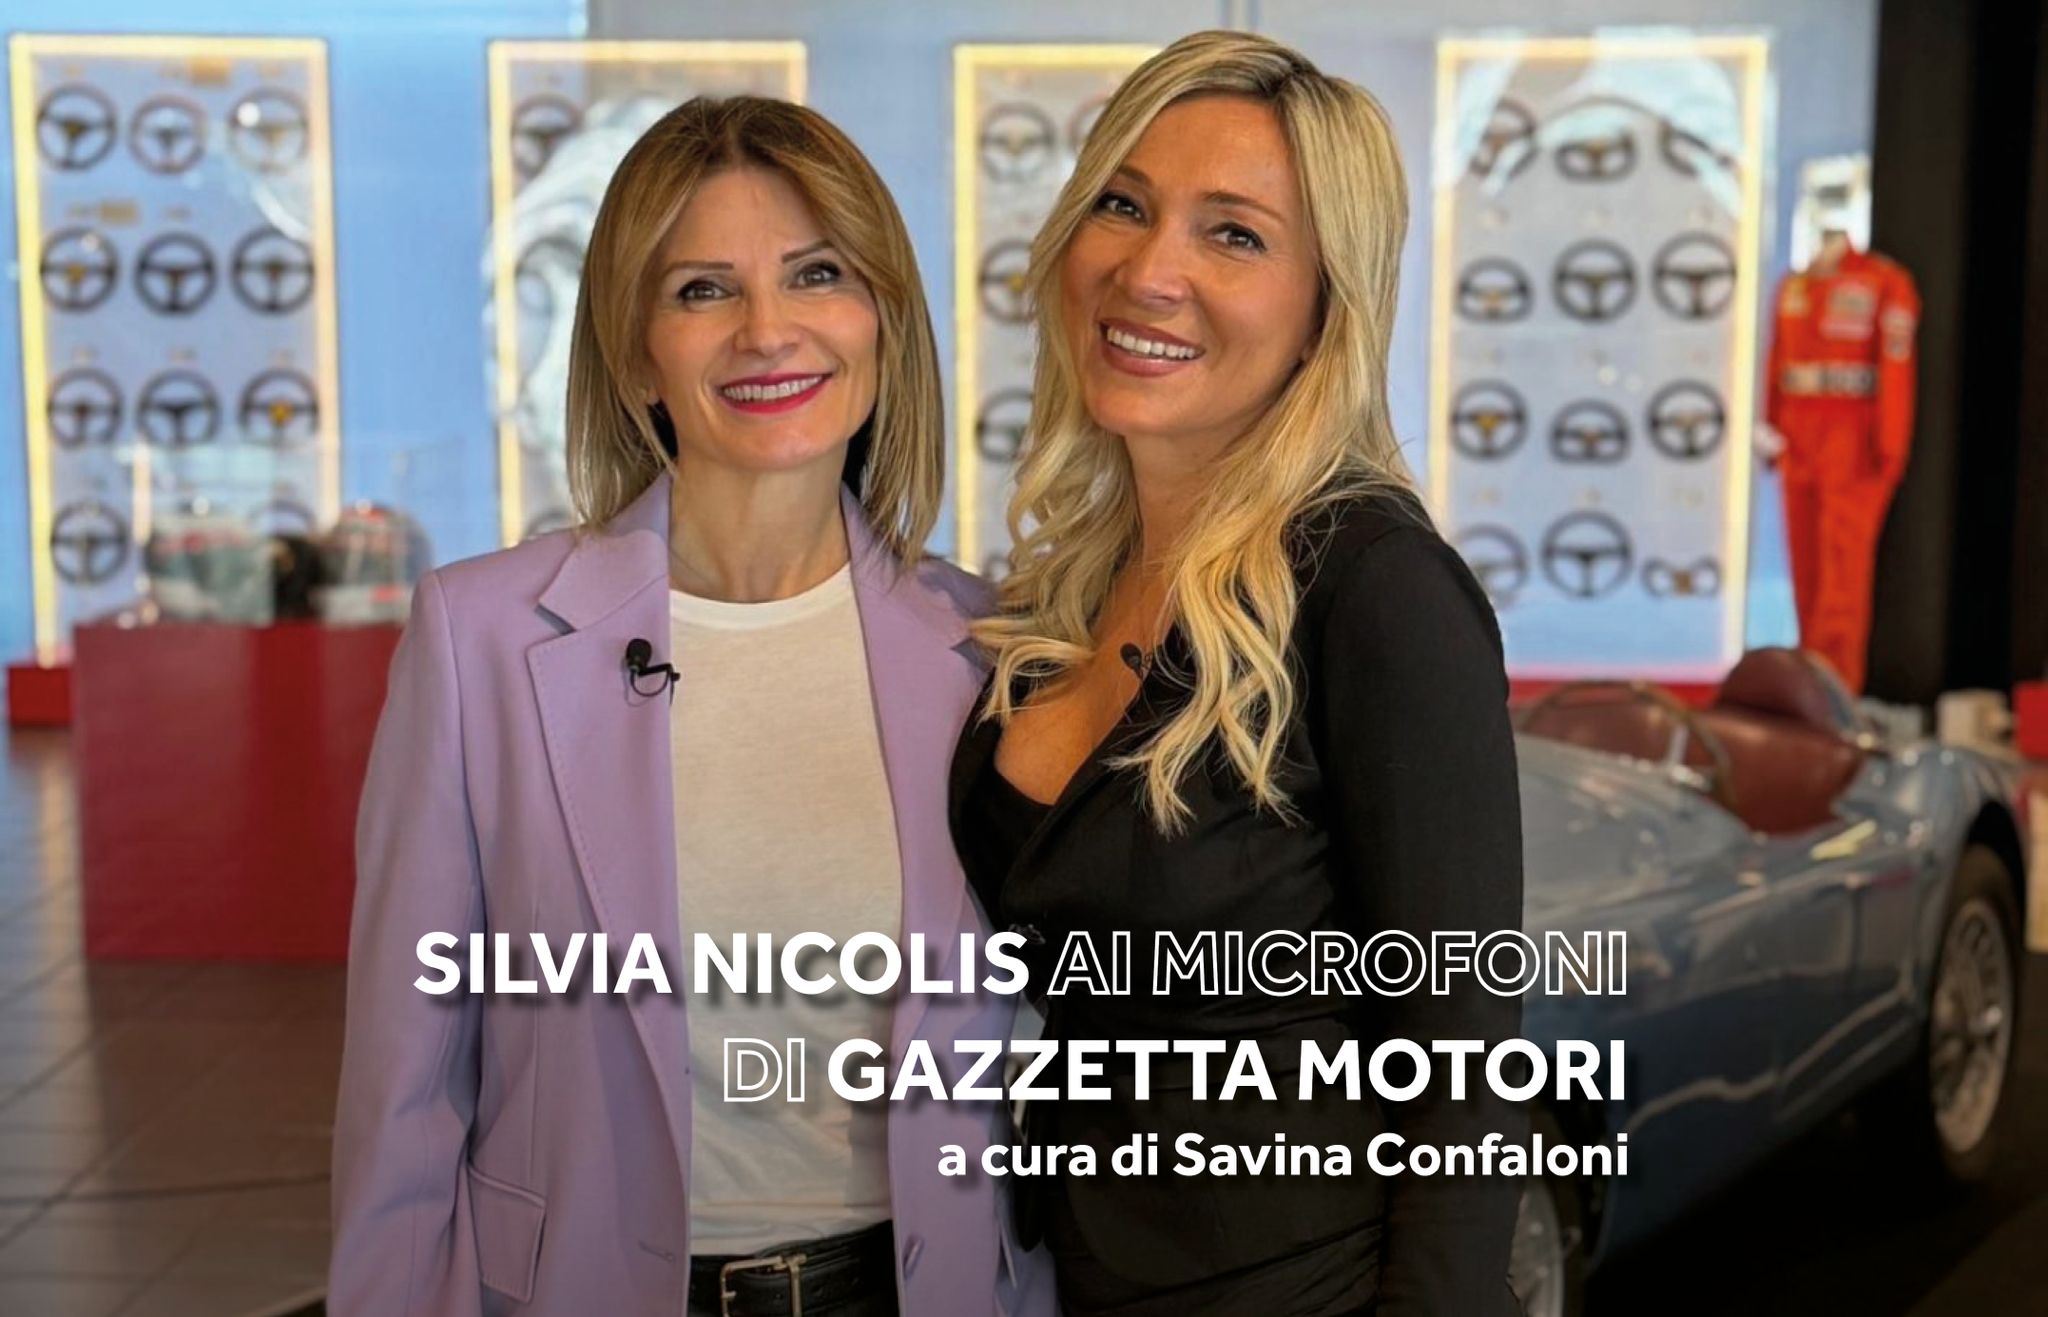 Museo Nicolis, Gazzetta motori, Silvia Nicolis e Savina Confaloni, auto d'epoca